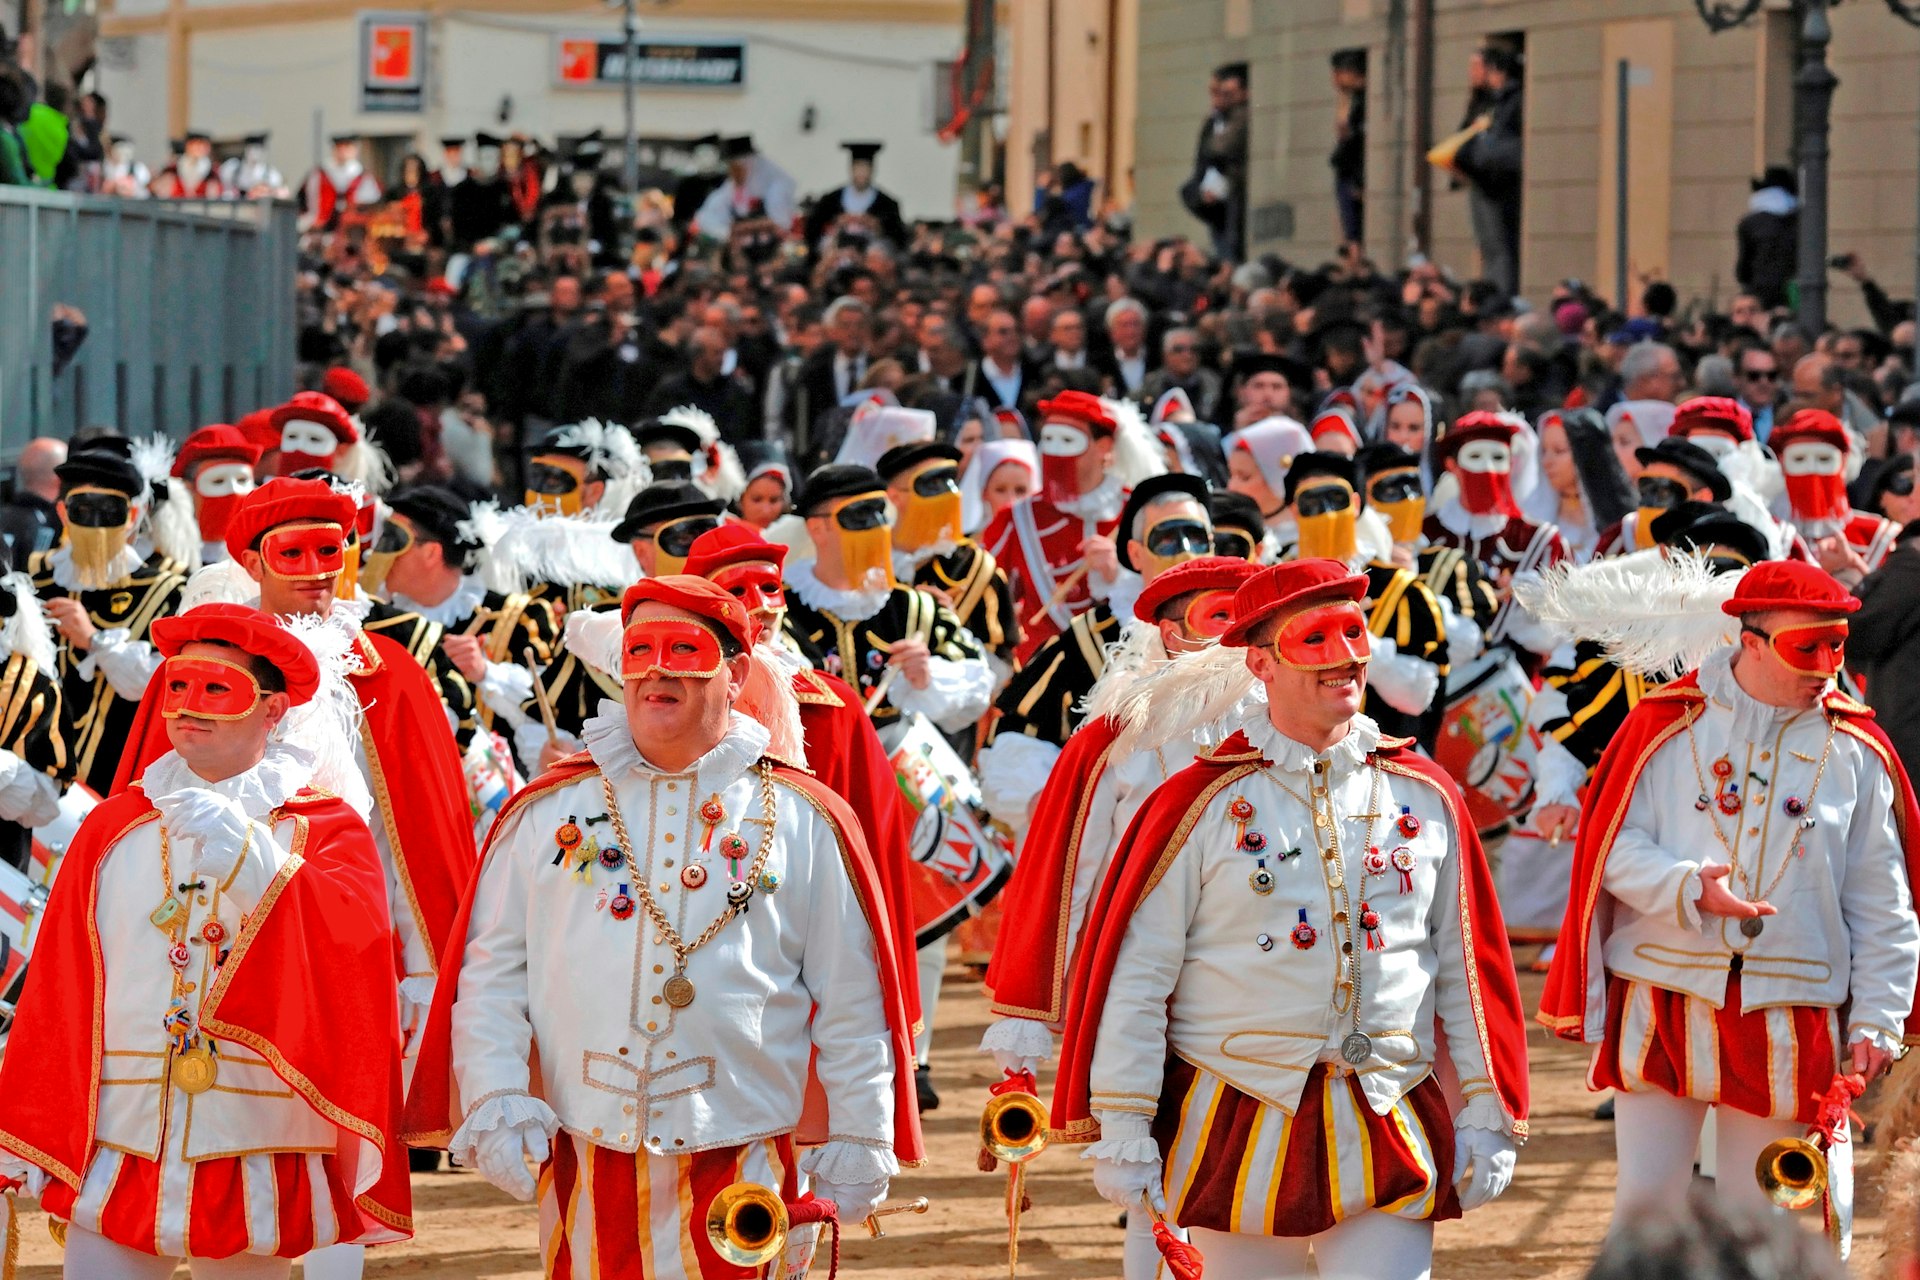 Marchers in costume on parade at the Sa Sartiglia festival, Oristano, Sardinia, Italy